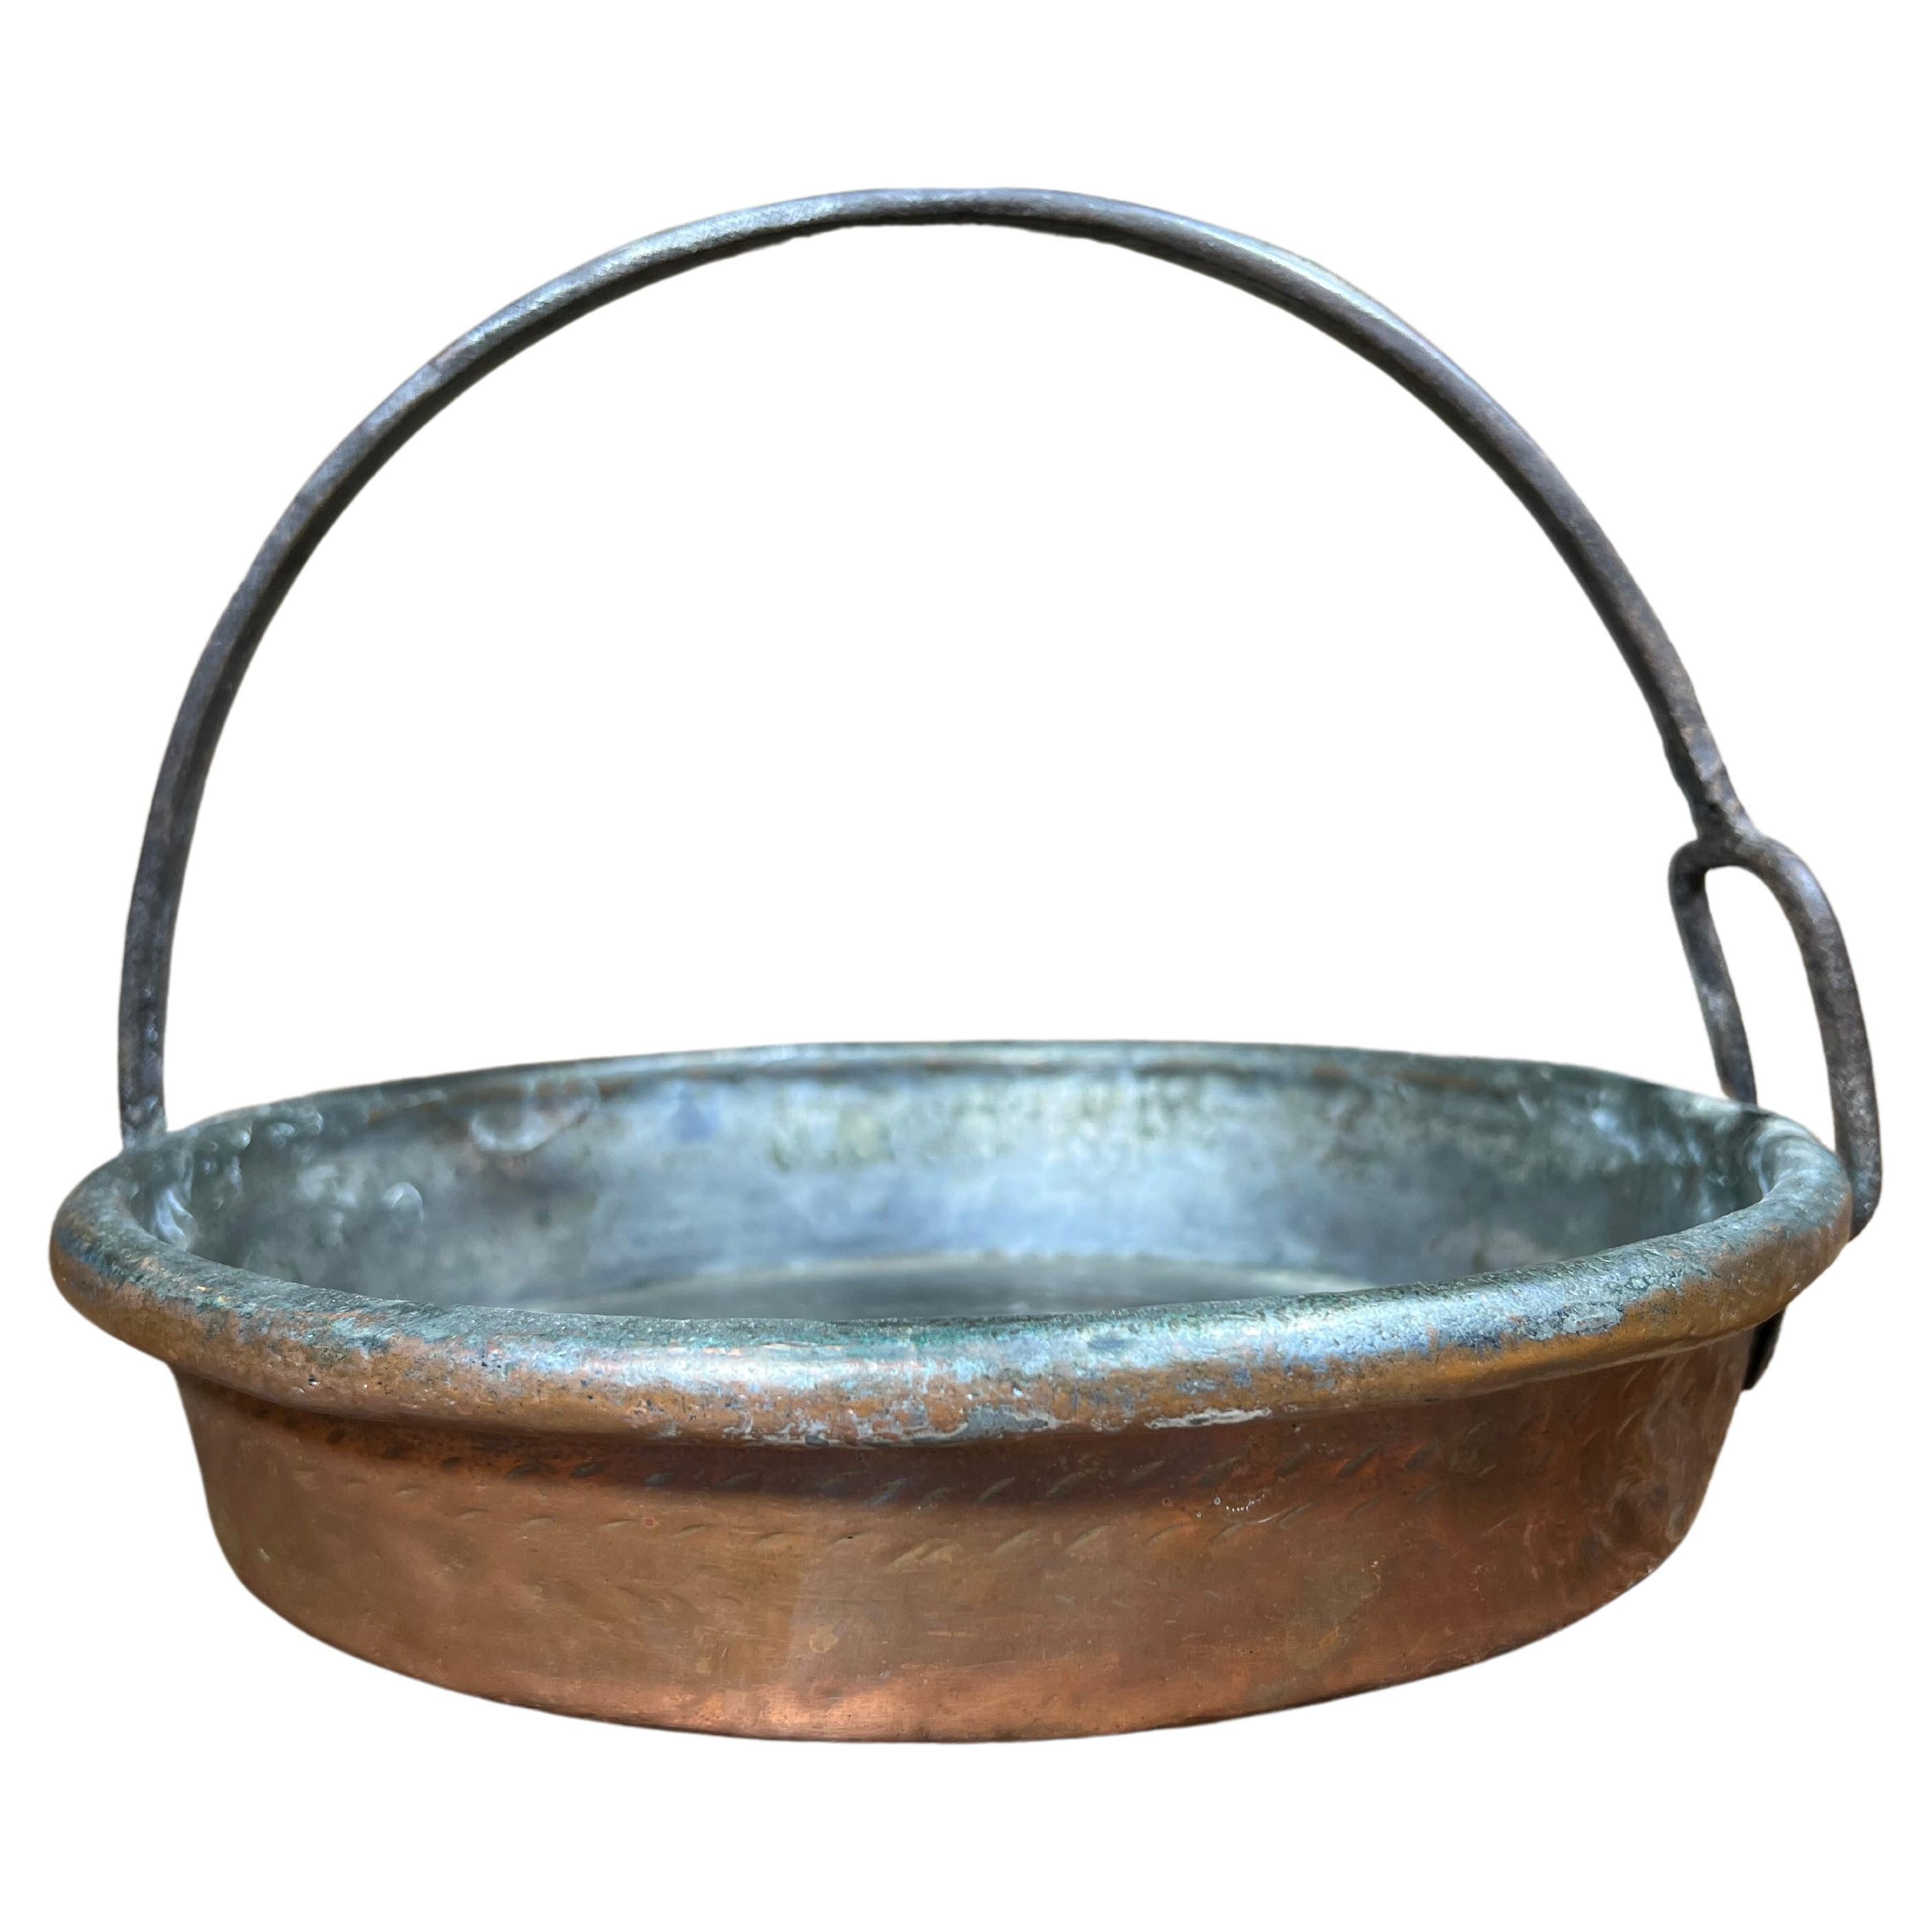 Early 19th Century Italian Copper Pan